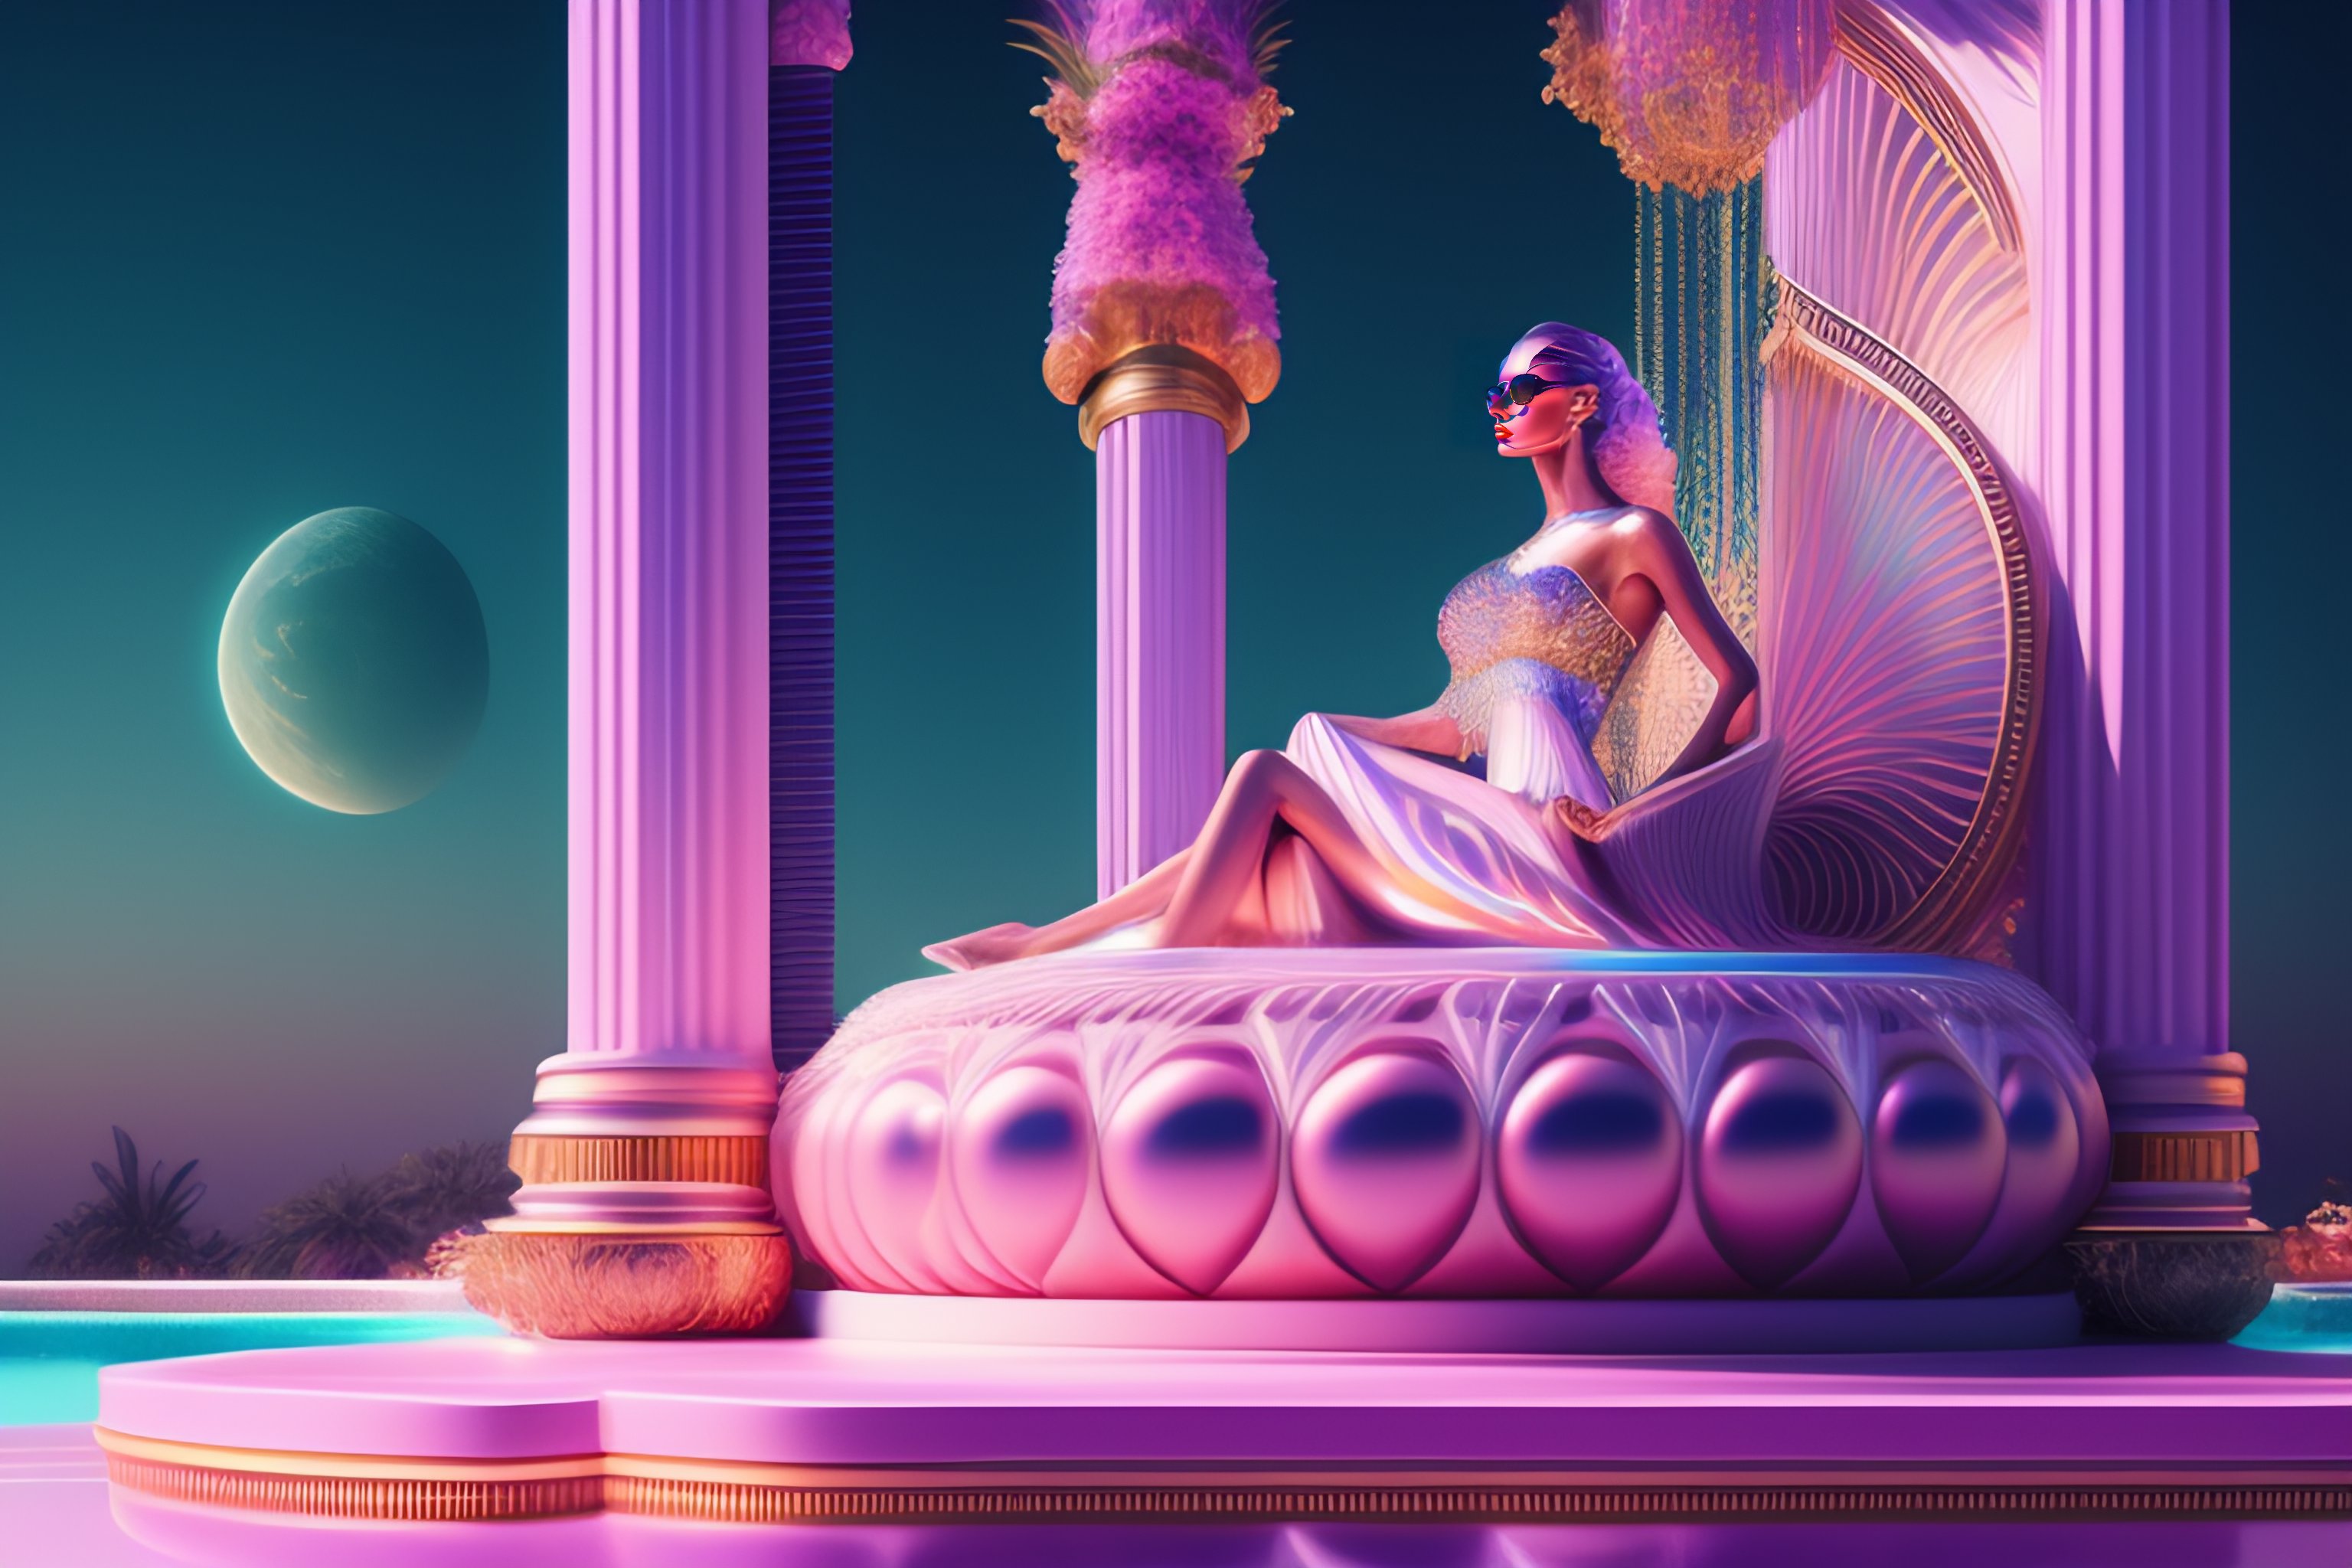 Lexica Beeple Masterpiece Hyperrealistic Surrealism Beautiful Full Body Goddess Sitting On